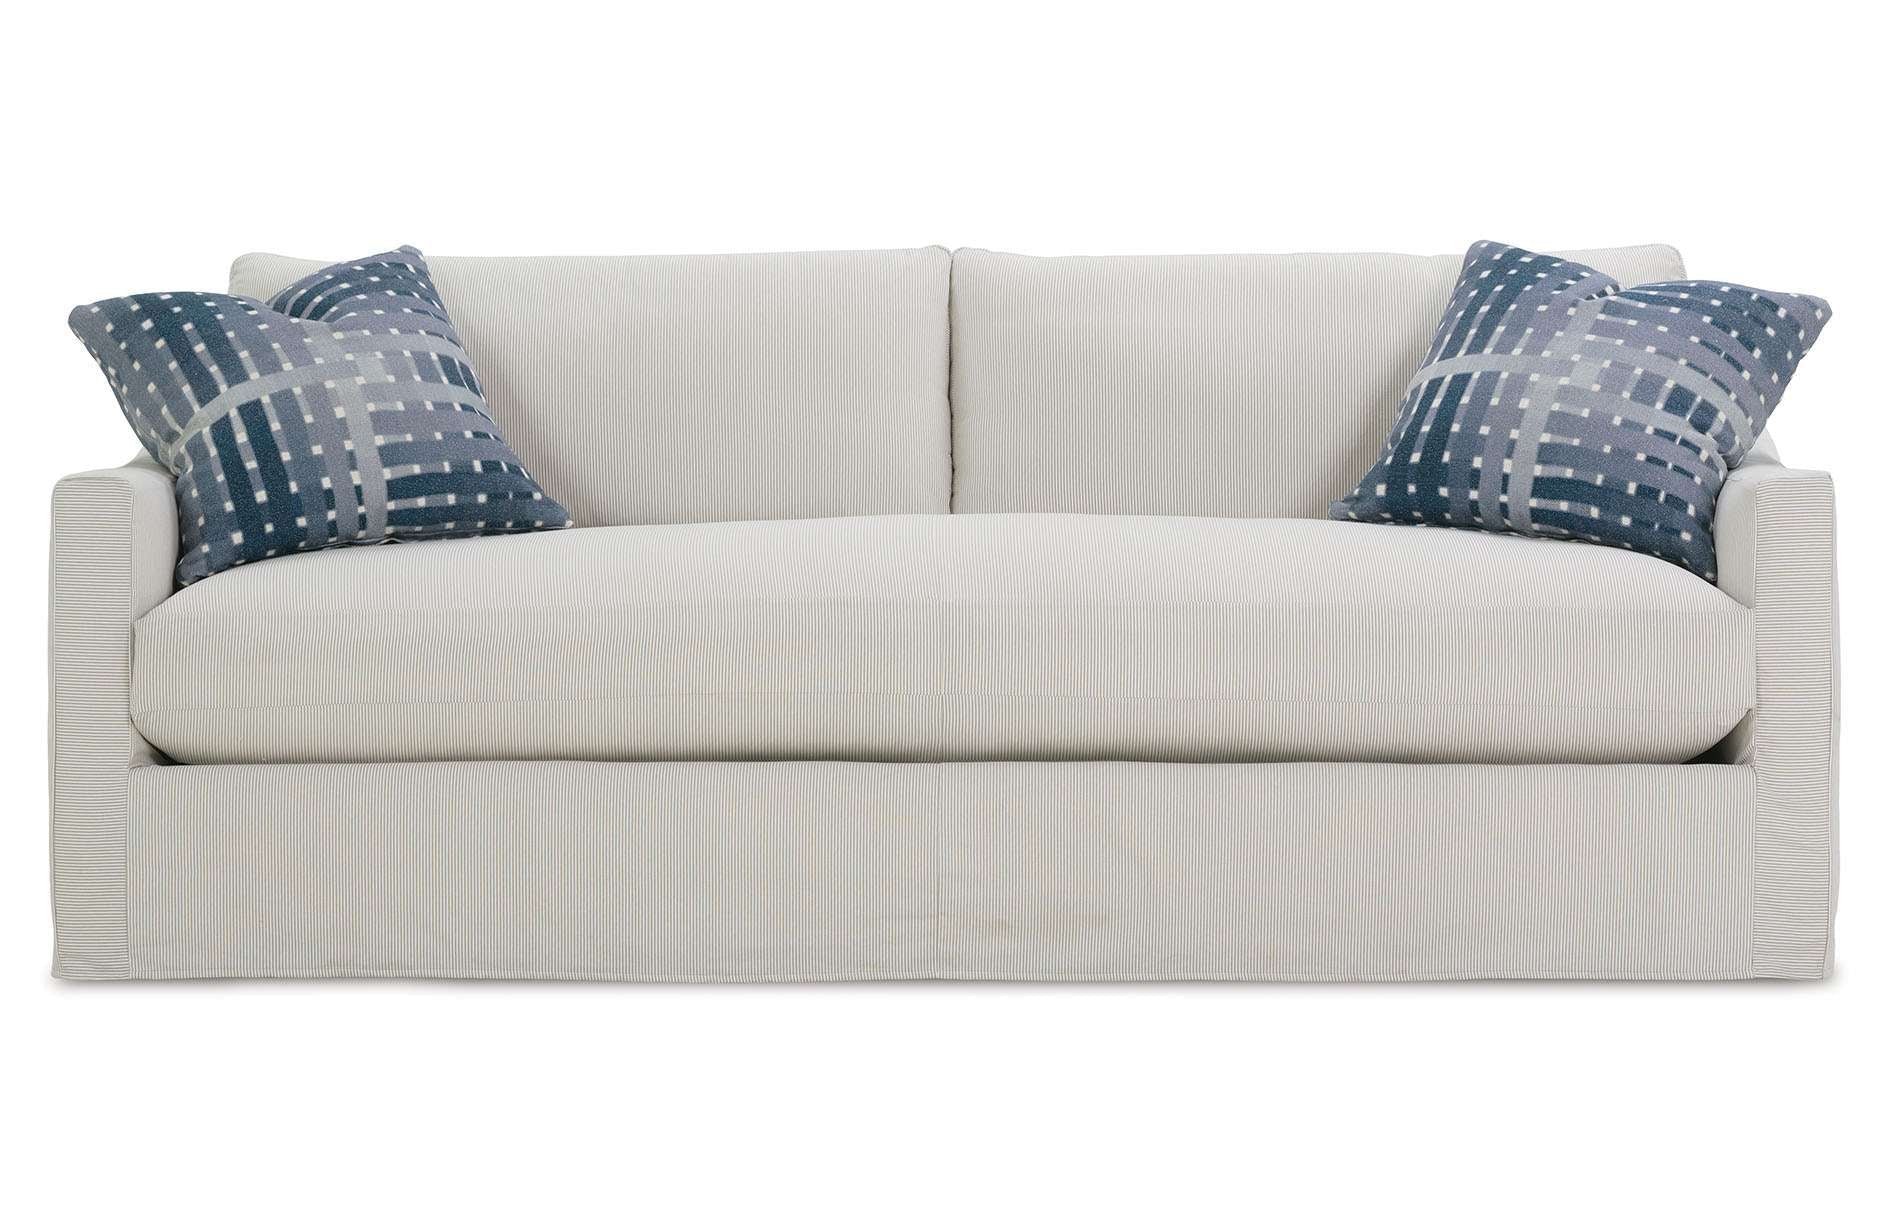 Bradford Slipcover Bench Cover Sofa - Rug & Home